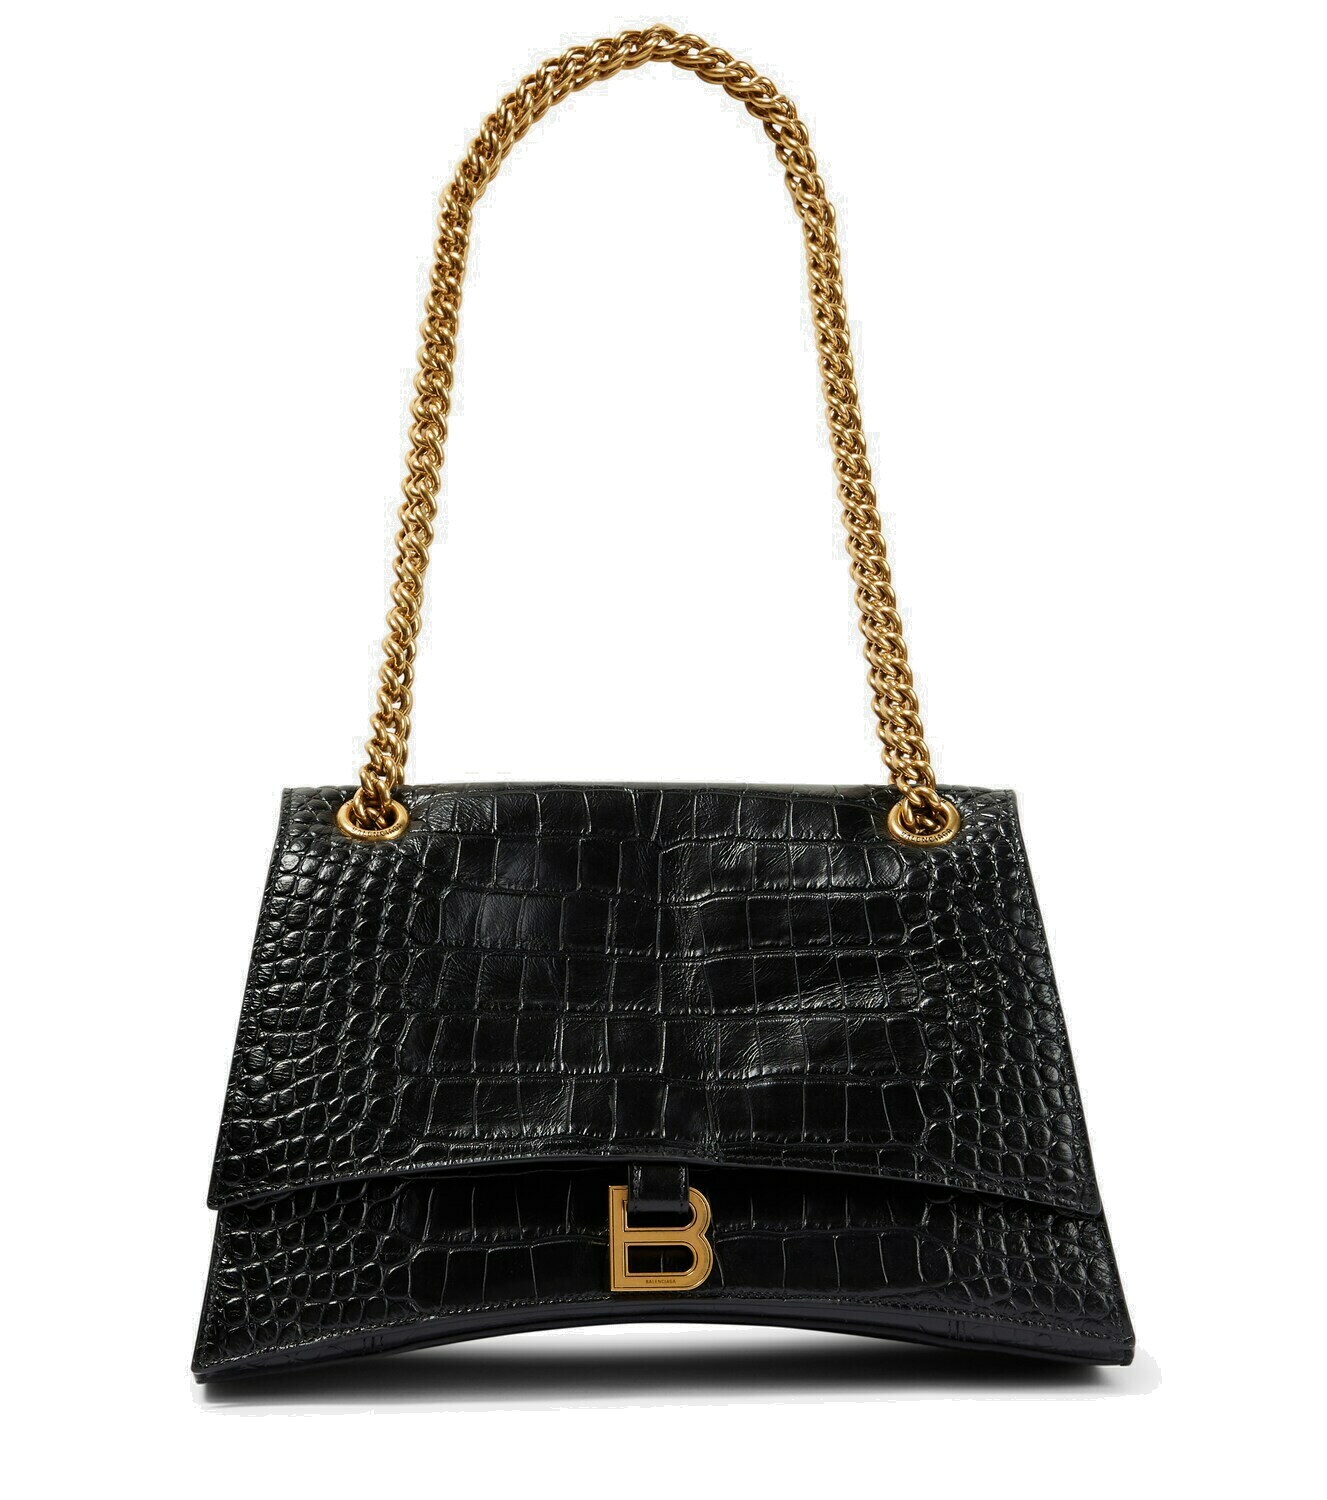 Balenciaga - Crush Medium croc-effect leather shoulder bag Balenciaga